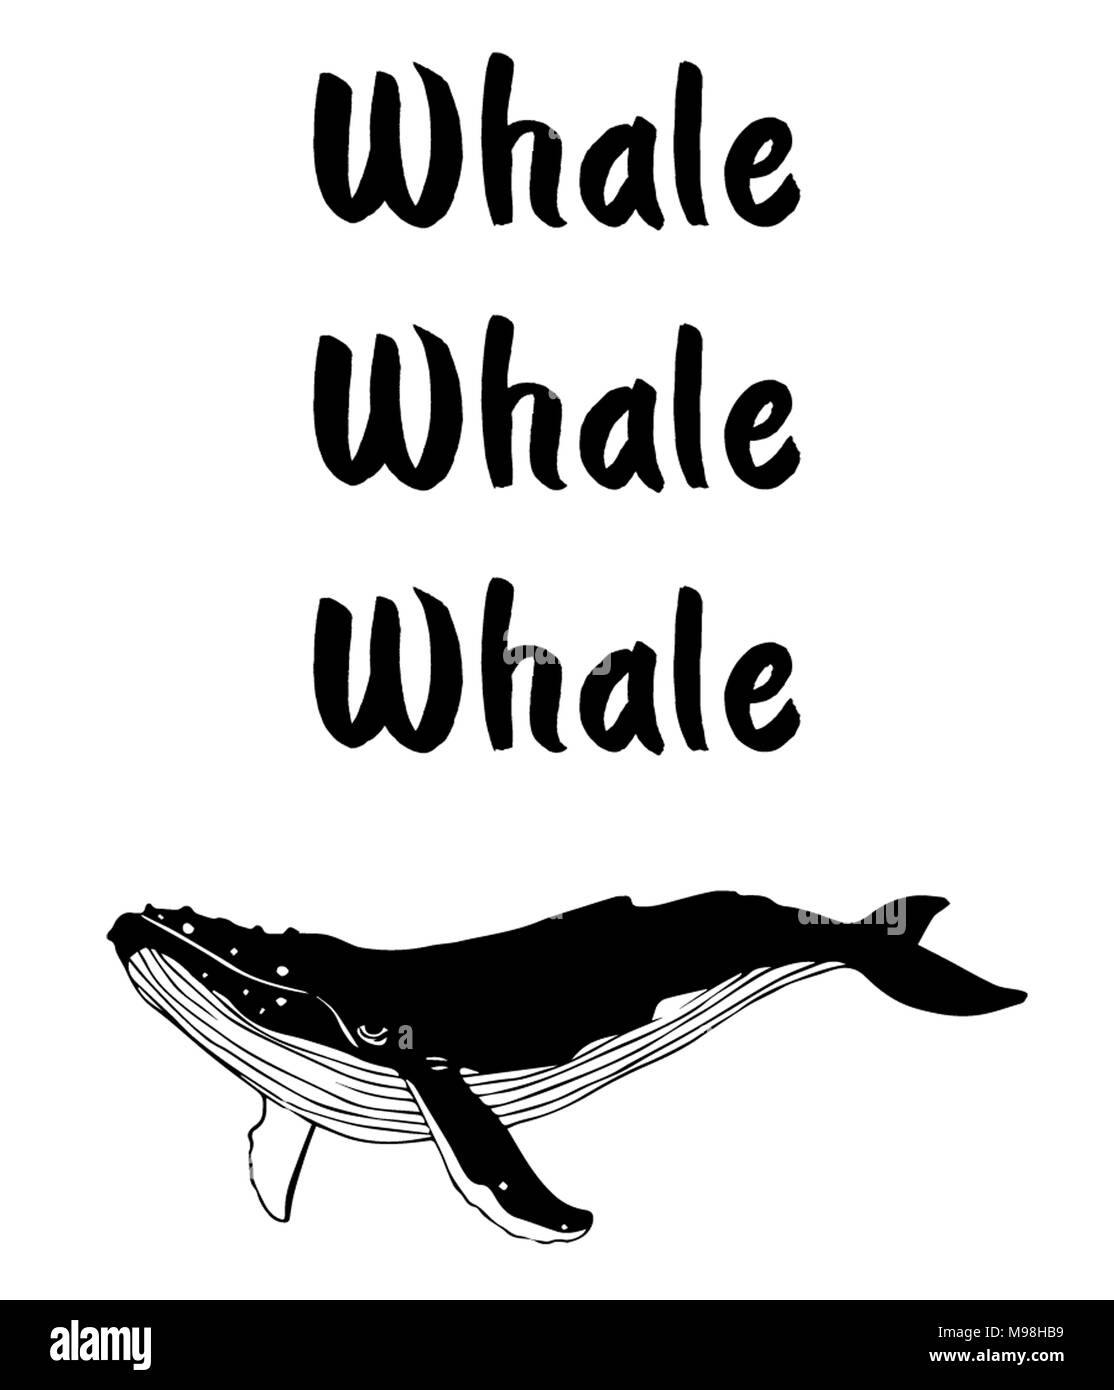 Whale Whale Whale Stock Photo